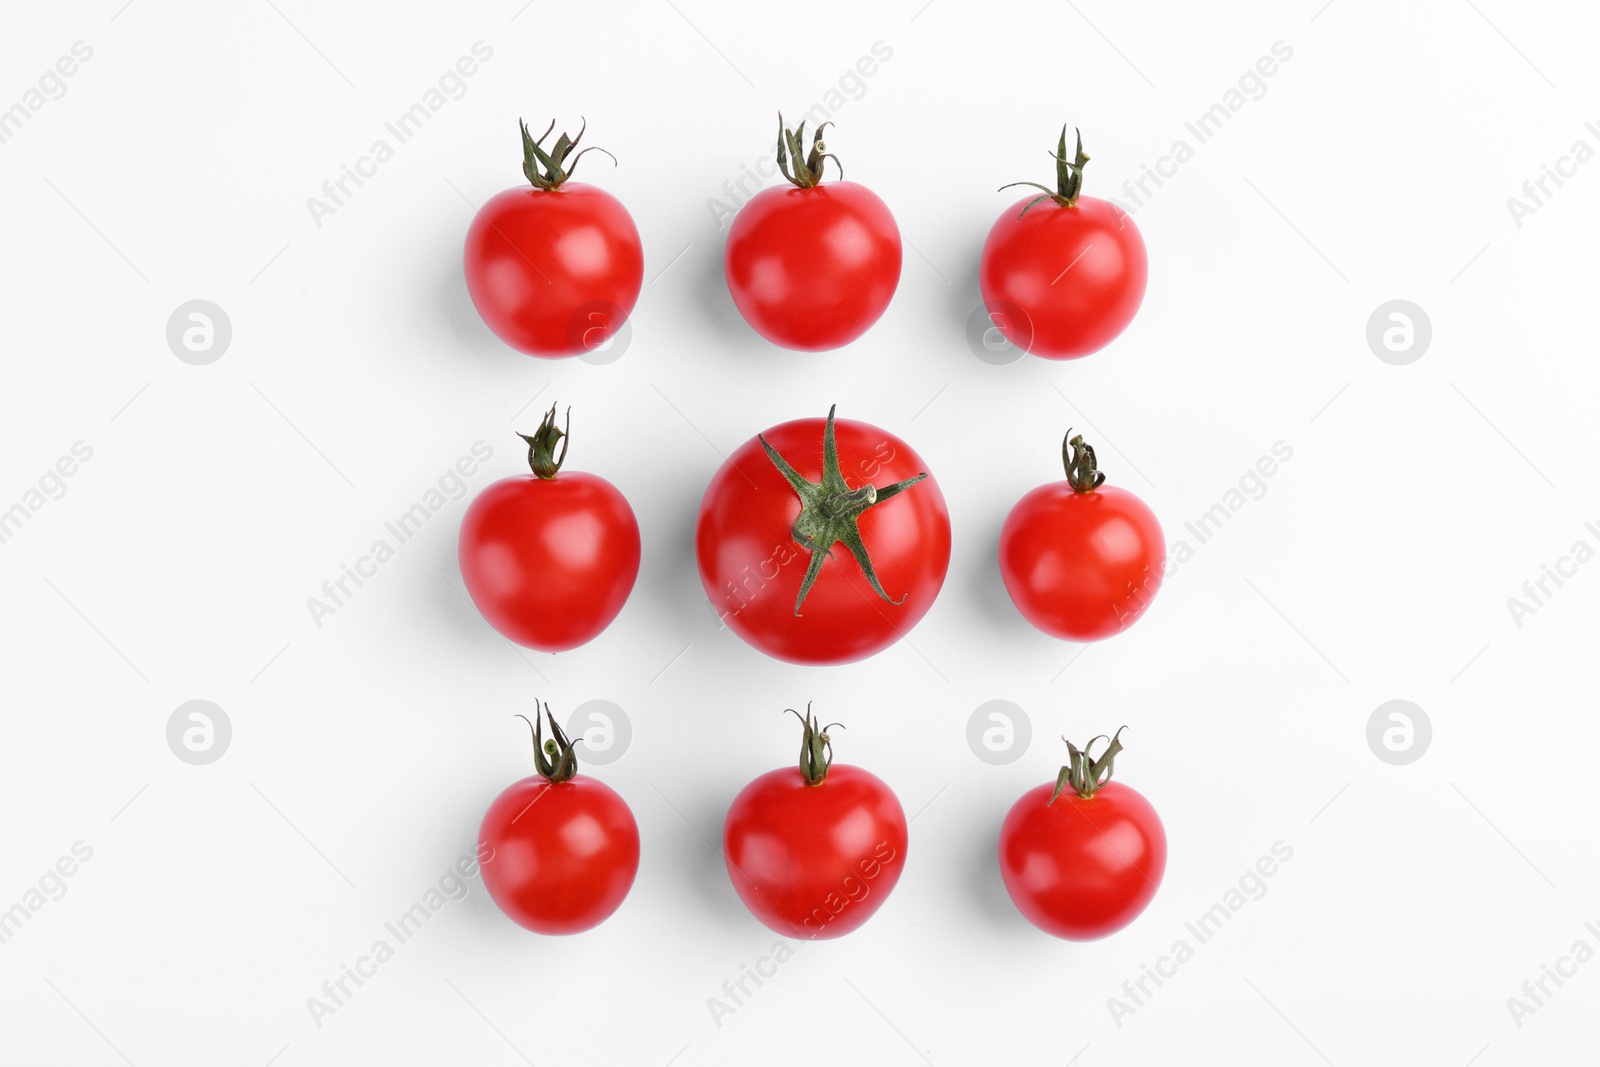 Photo of Many ripe tomatoes on white background, flat lay